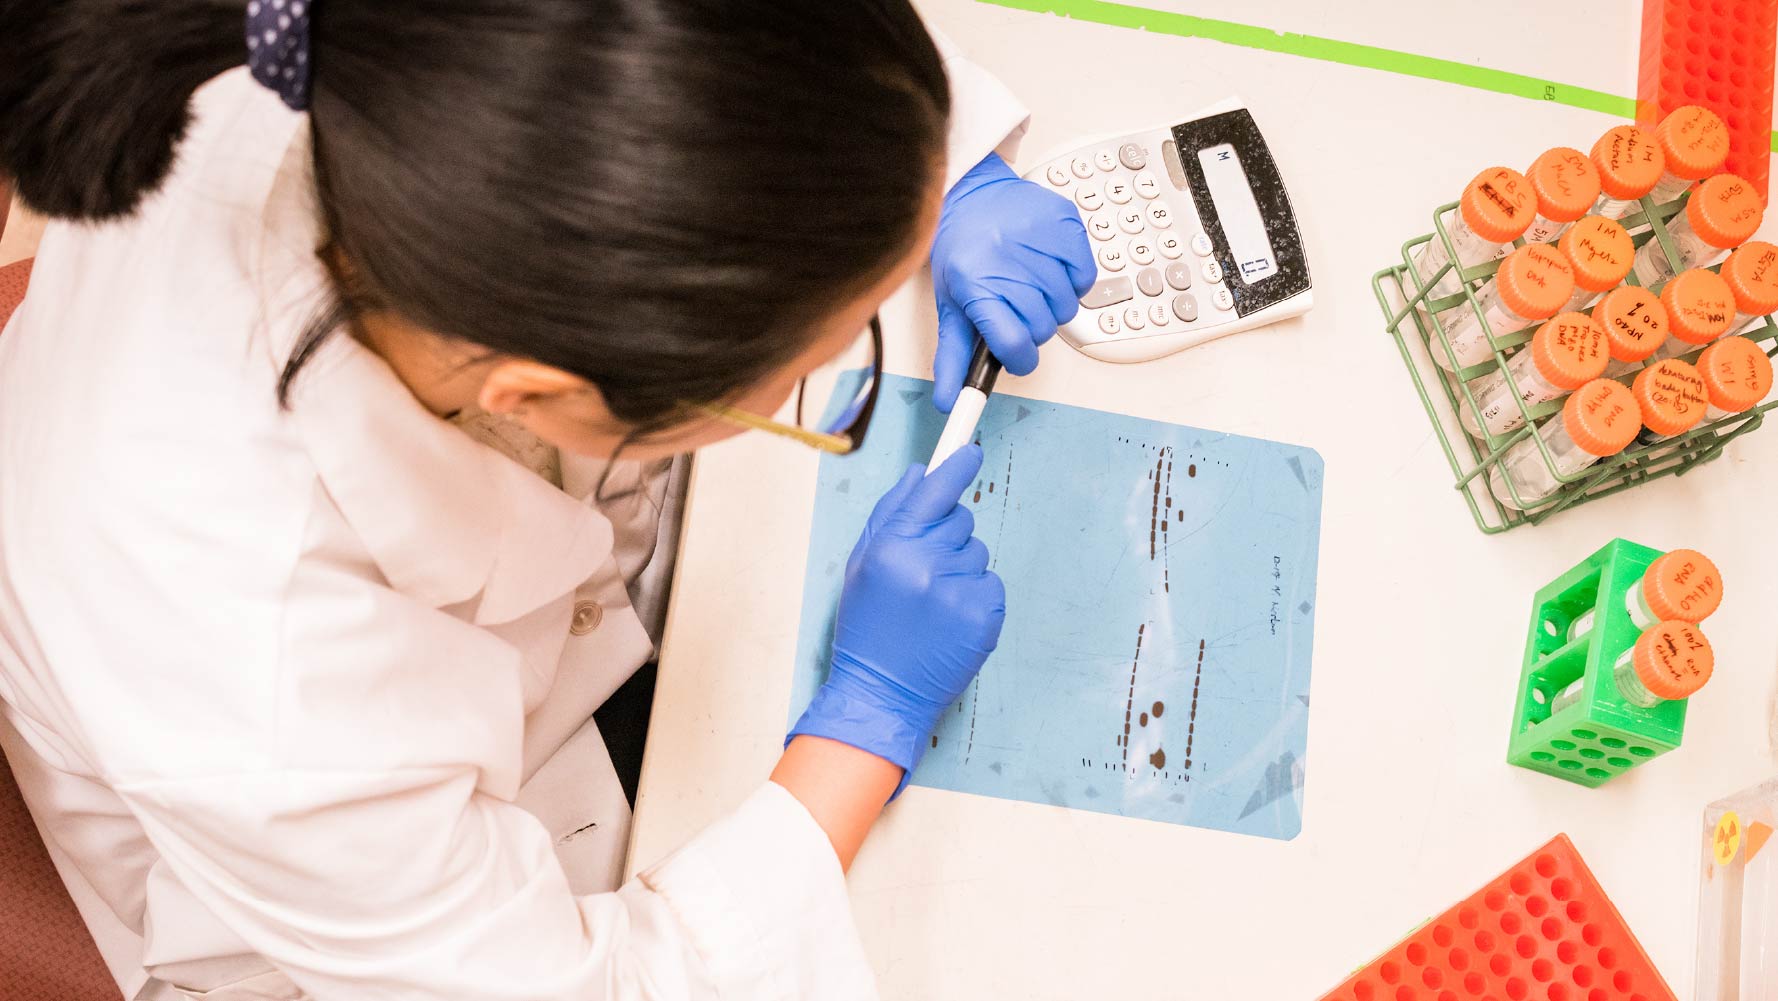 Laboratory technician analyzes biological samples using gel electrophoresis.